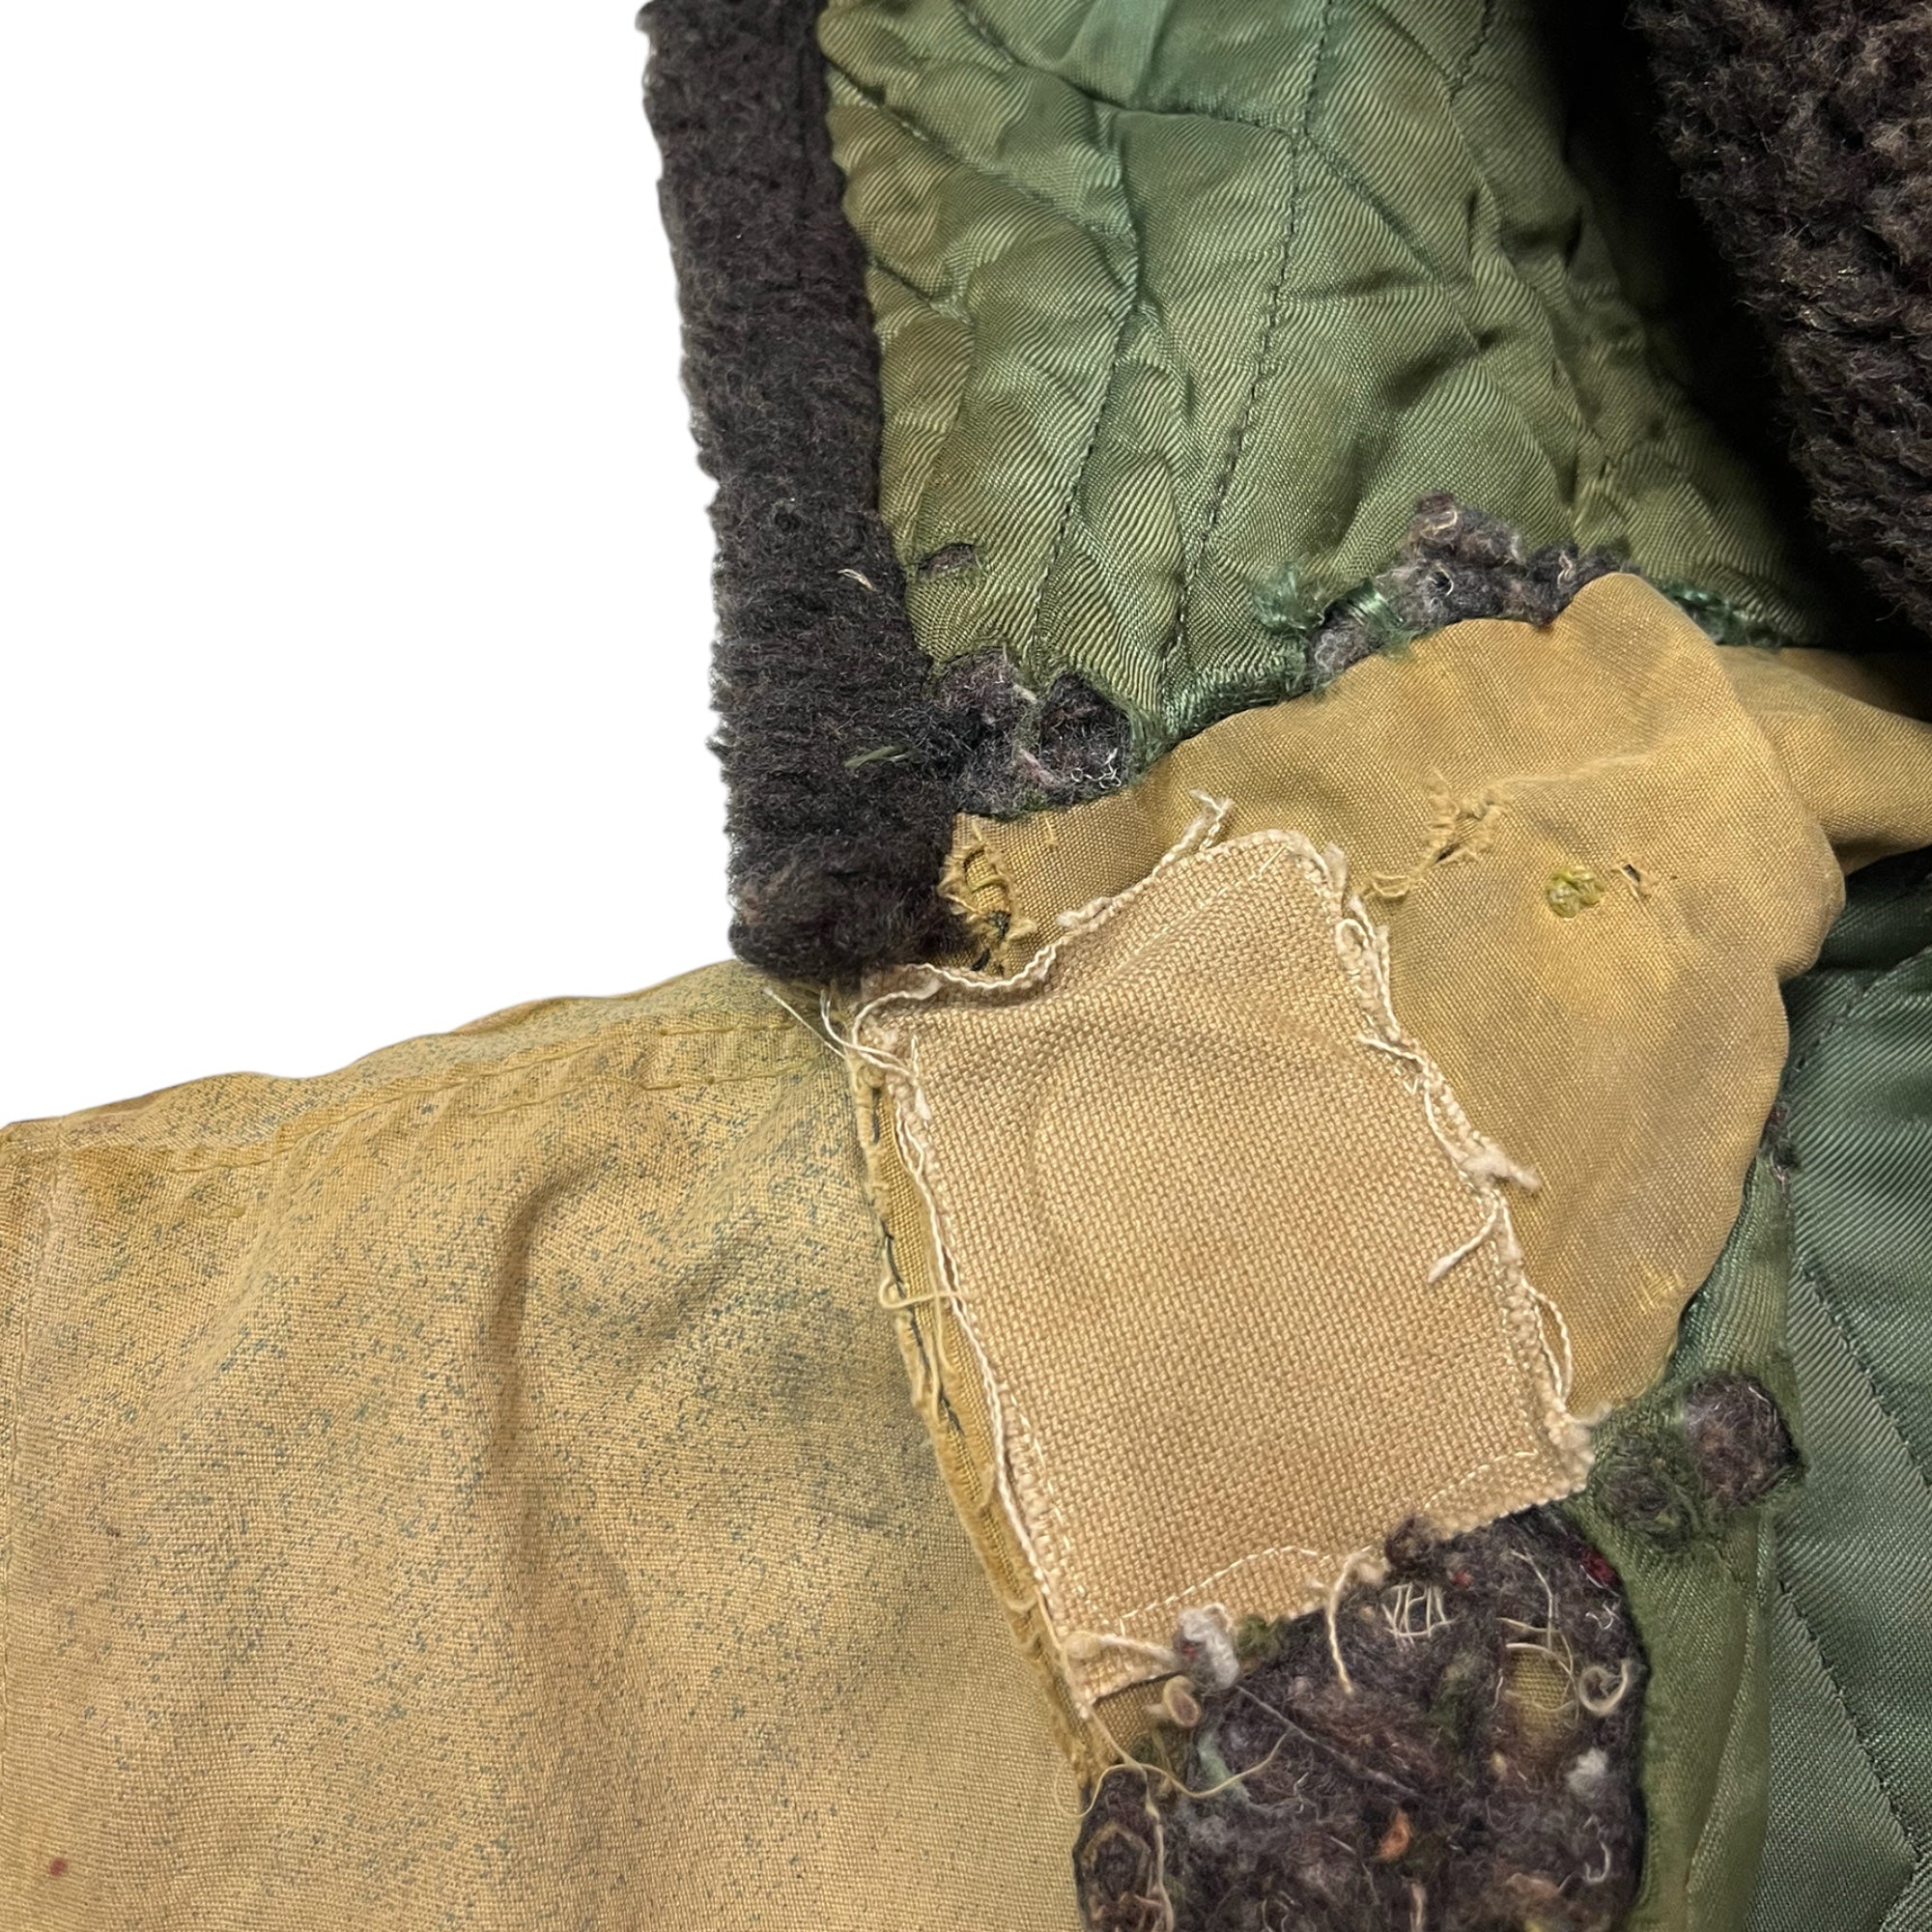 1950s/60s Distressed Civilian Deck Jacket with Denim ‘Leg’ Repaired Sleeves - Dirty Khaki Tan - M/L